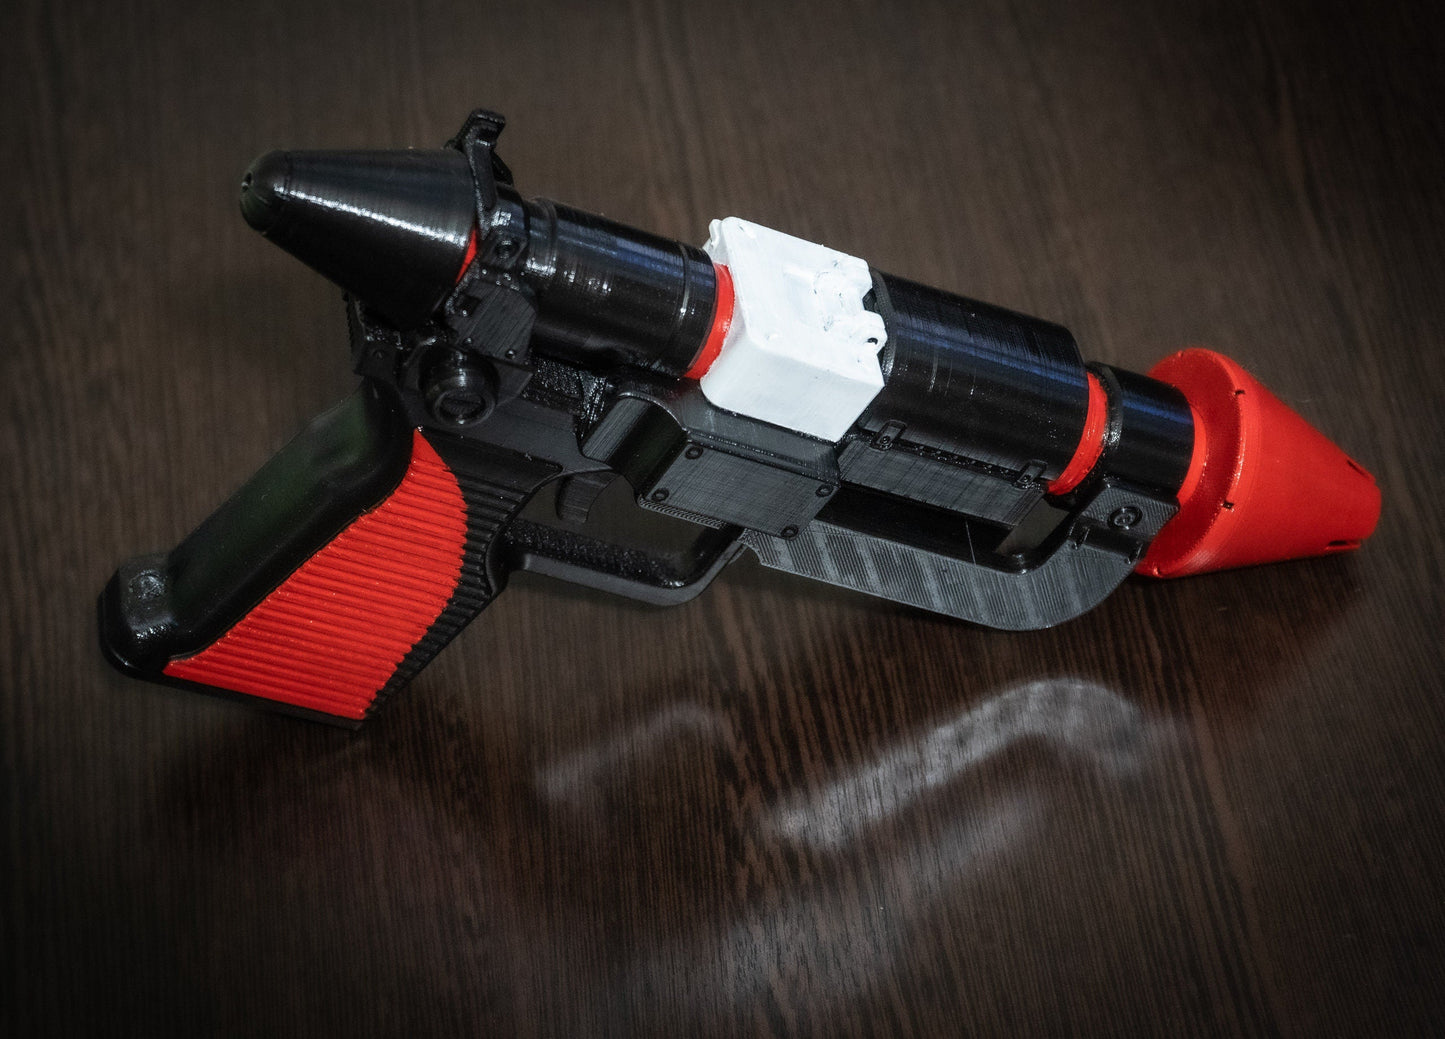 Major Baron Elrik Vonreg Blaster | RK-3 blaster pistol | Star Wars Props - 3DPrintProps